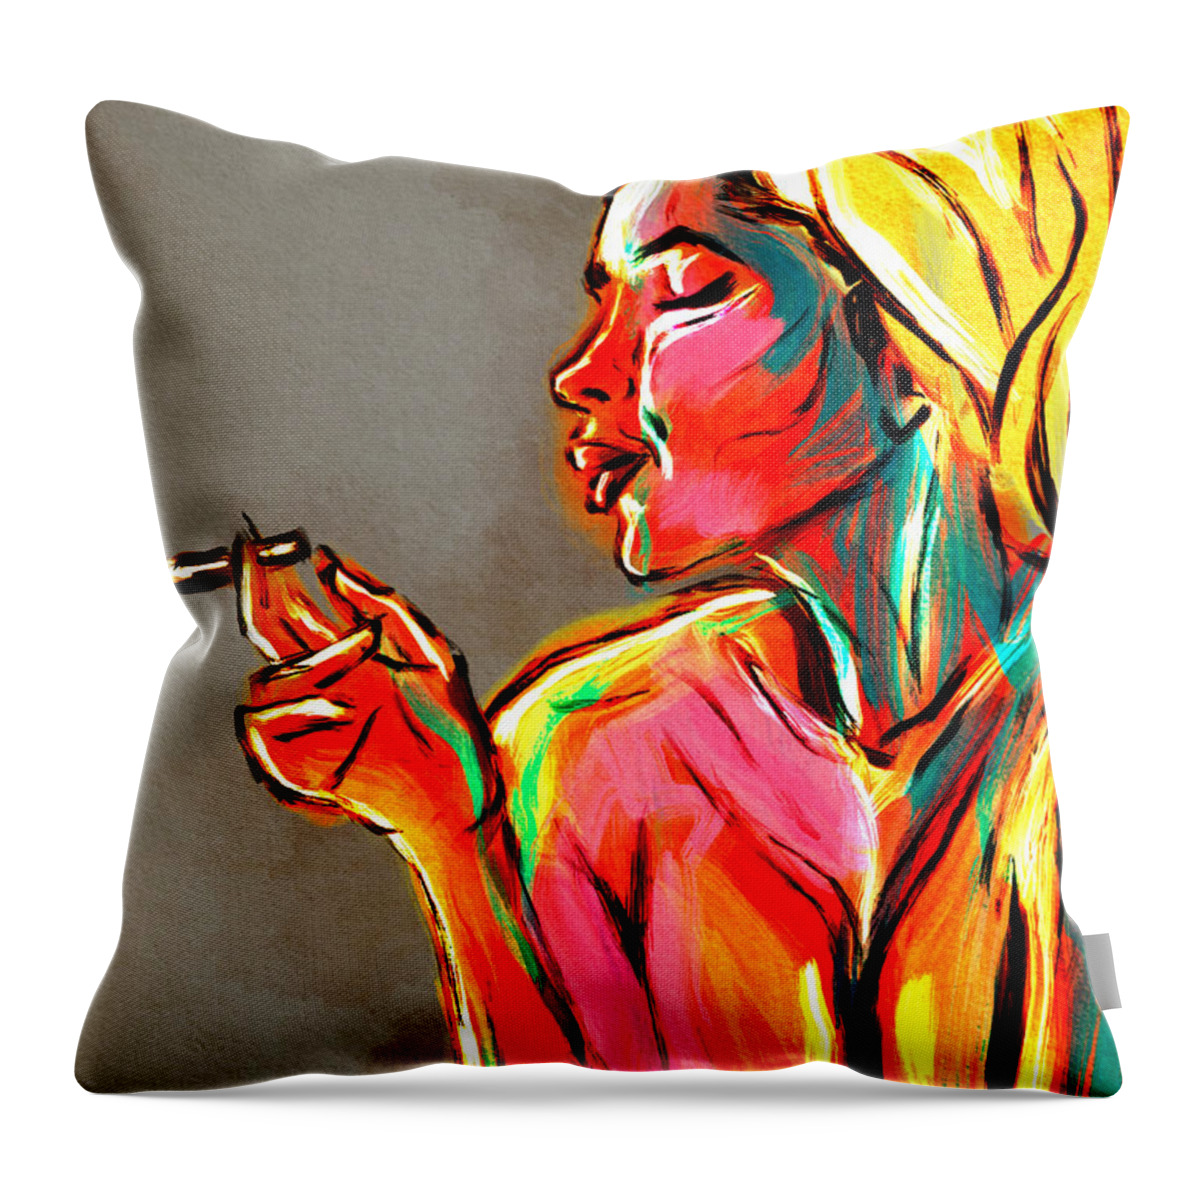 Portrait Throw Pillow featuring the digital art Relaxing After Bath by Michael Kallstrom